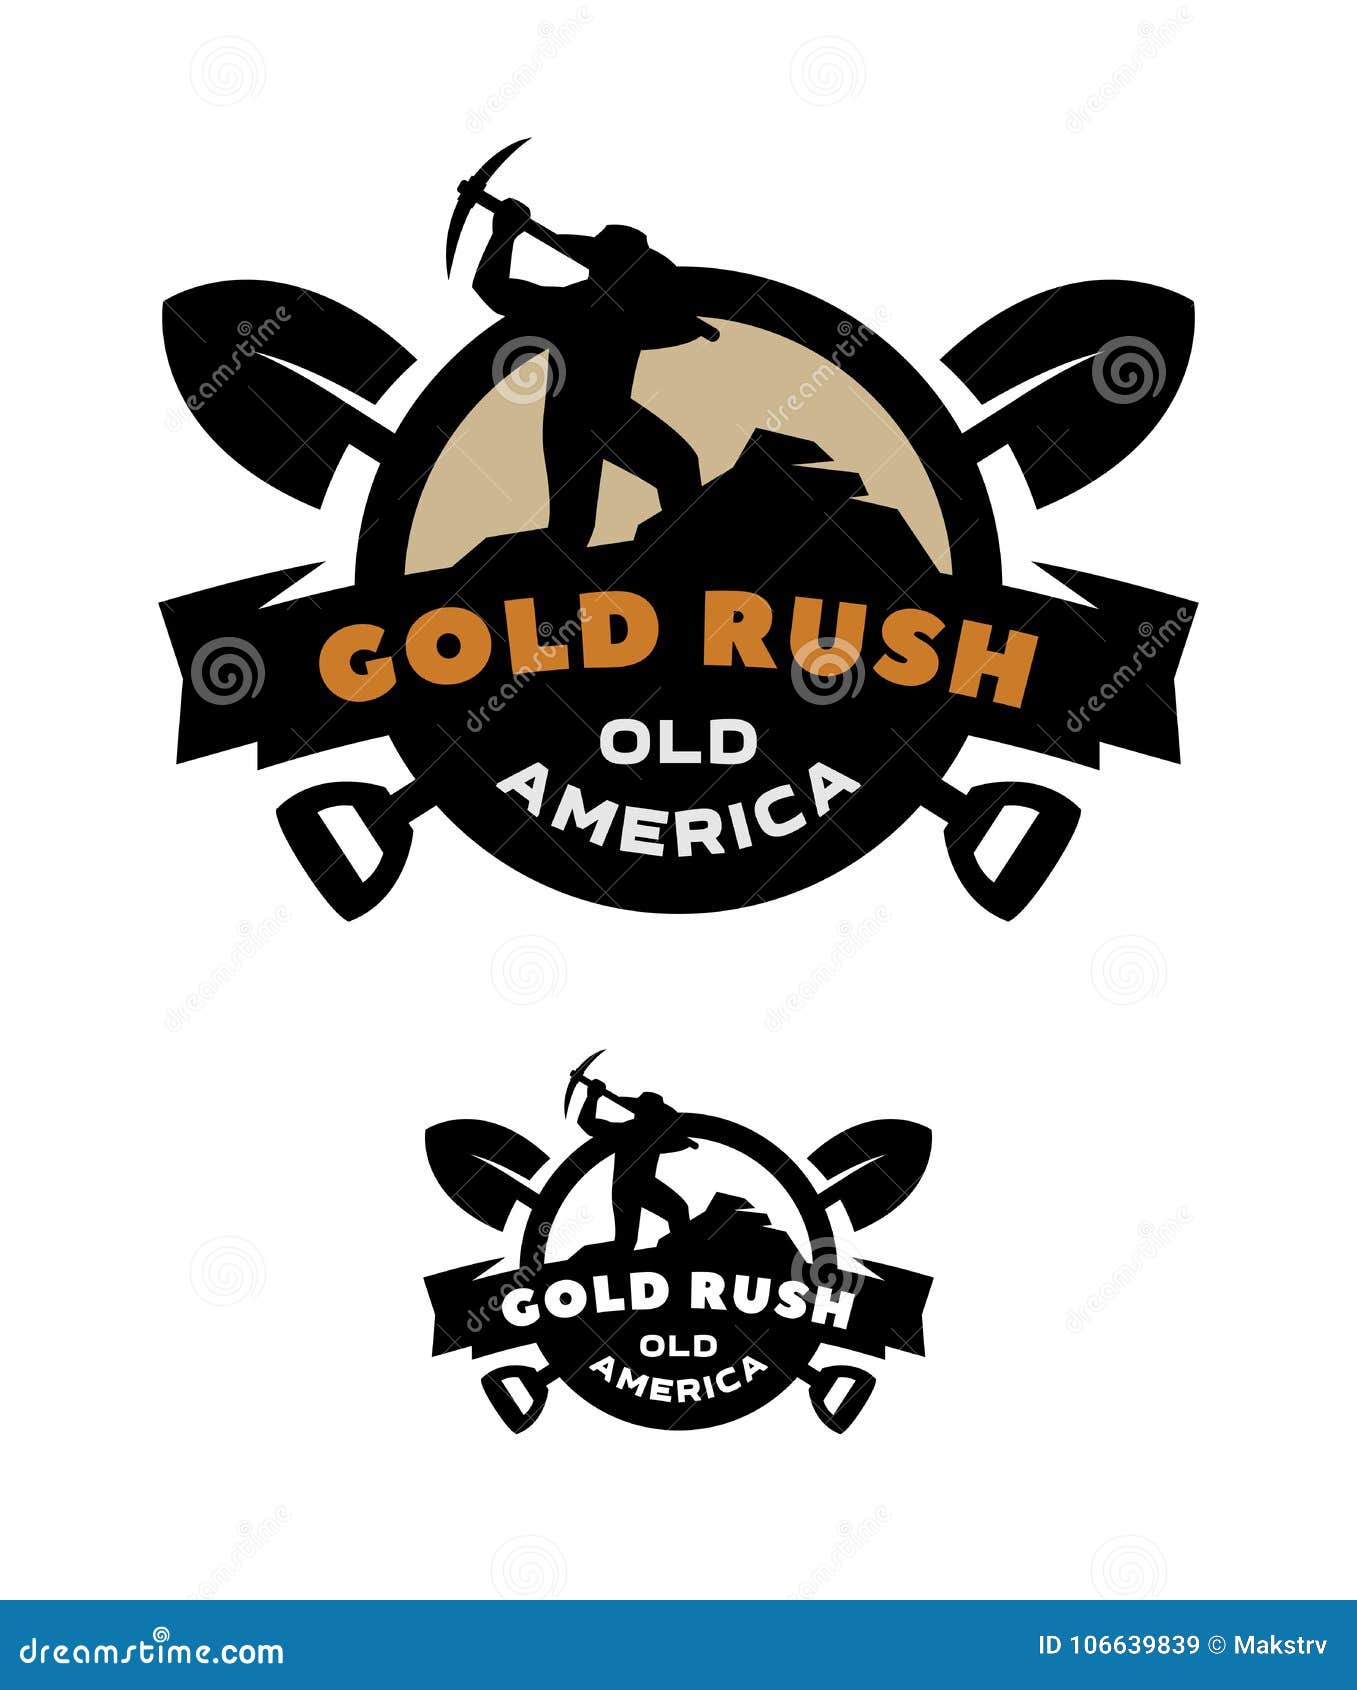 gold rush, emblem, logo.